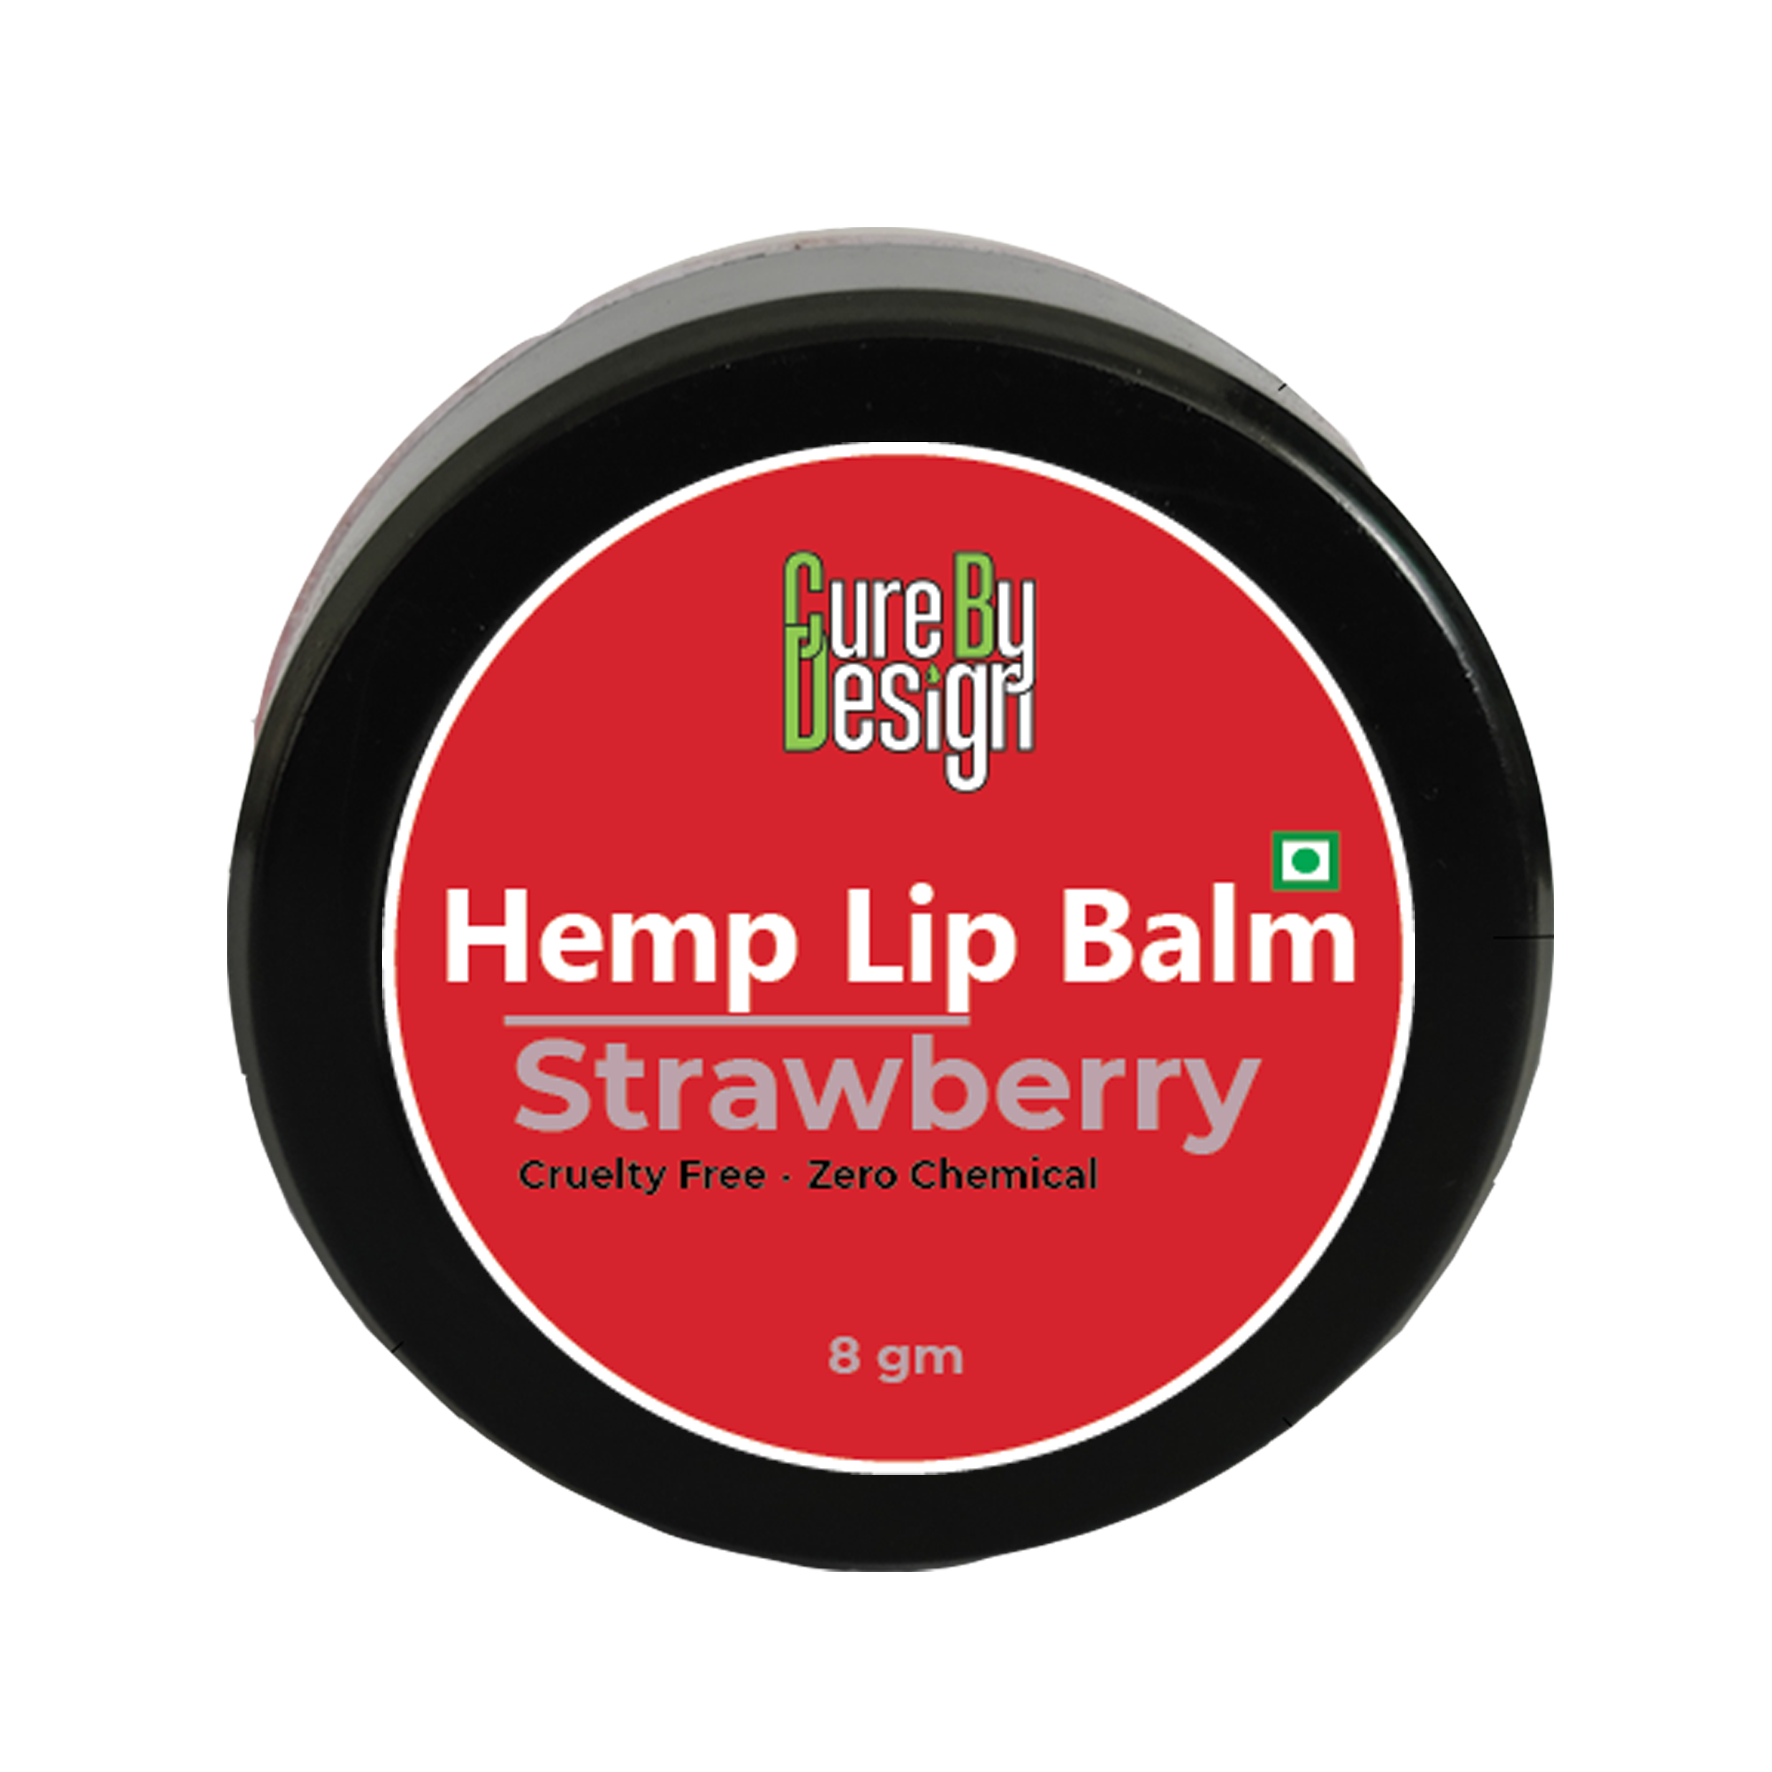 Cure By Design Hemp Lip Balm Strawberry 8gm